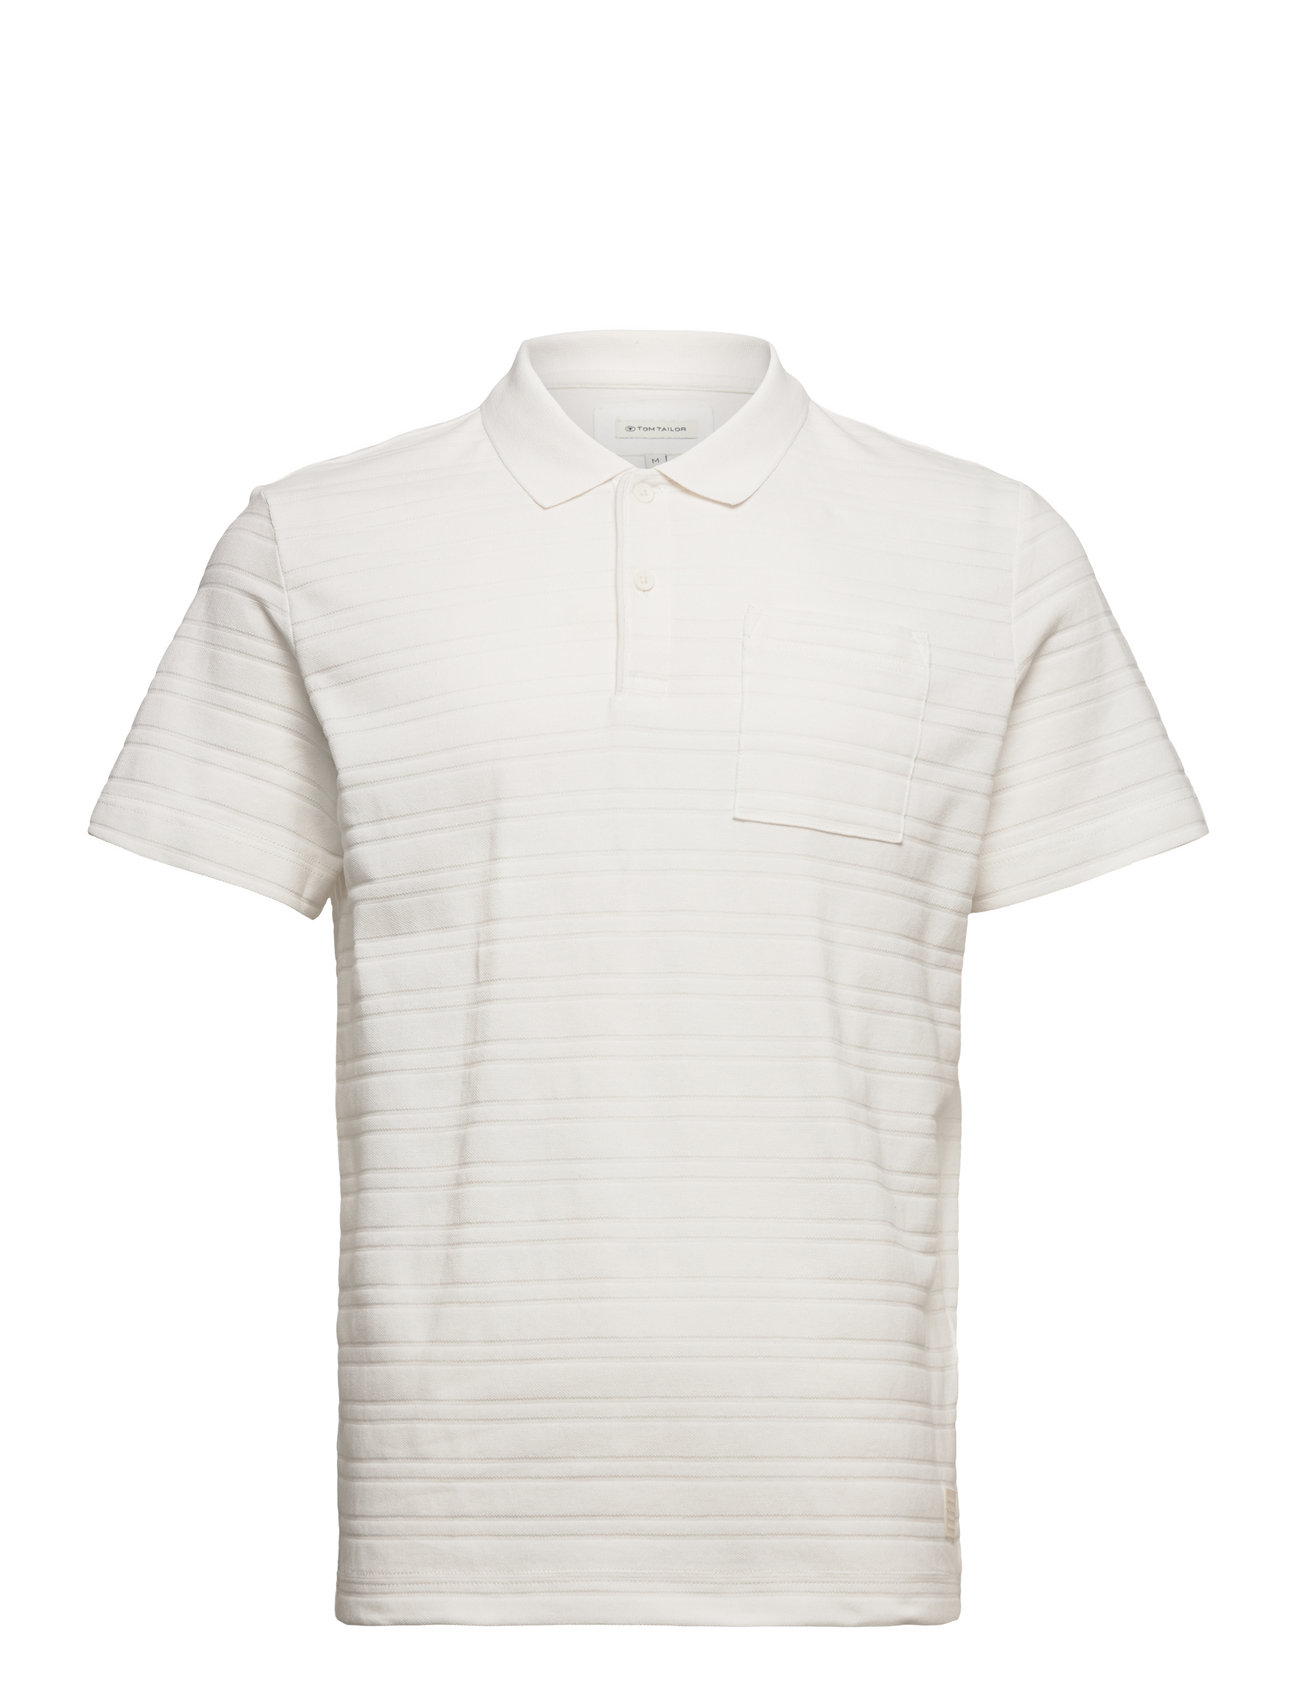 Tailor Tom Shirts Polo - Polo Structured Piqué